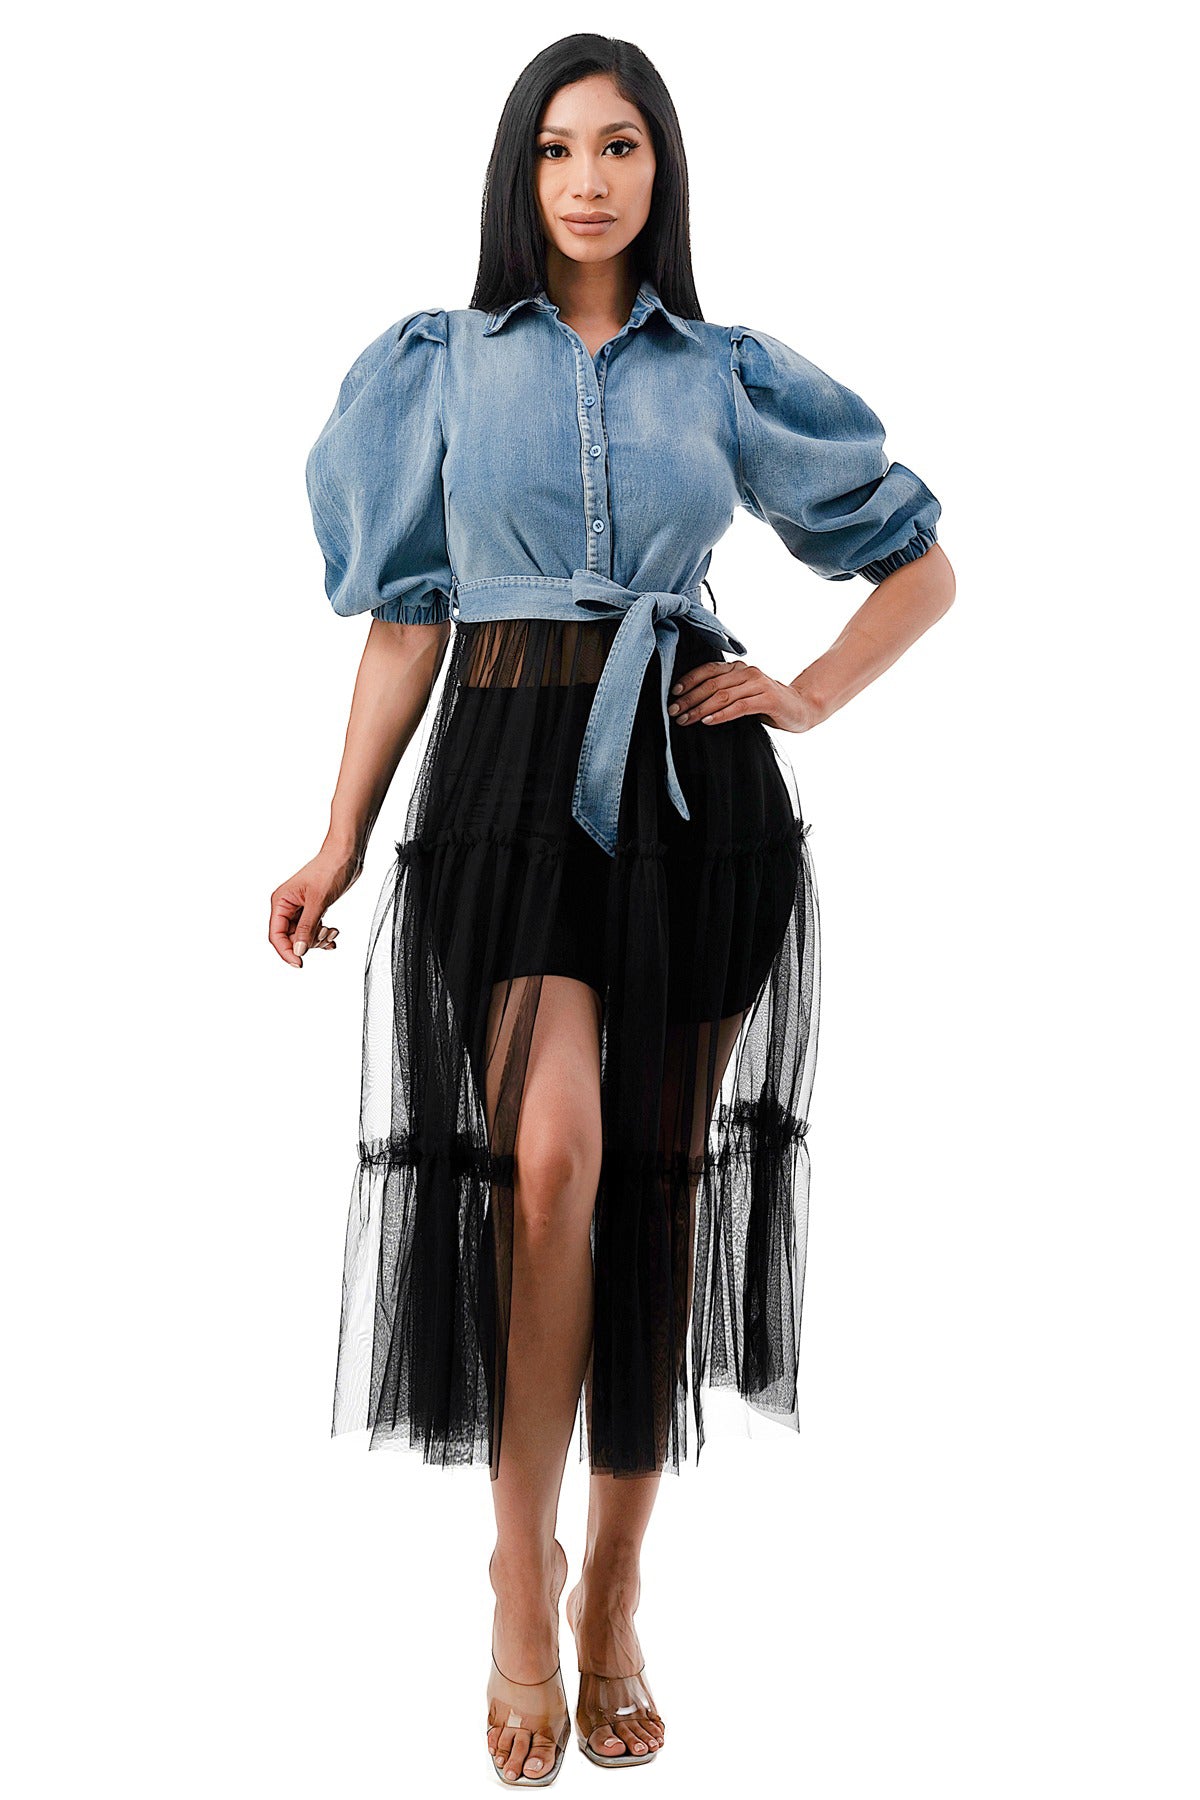 Zunie Blue Dresses for Girls Sizes 2T-5T | Mercari